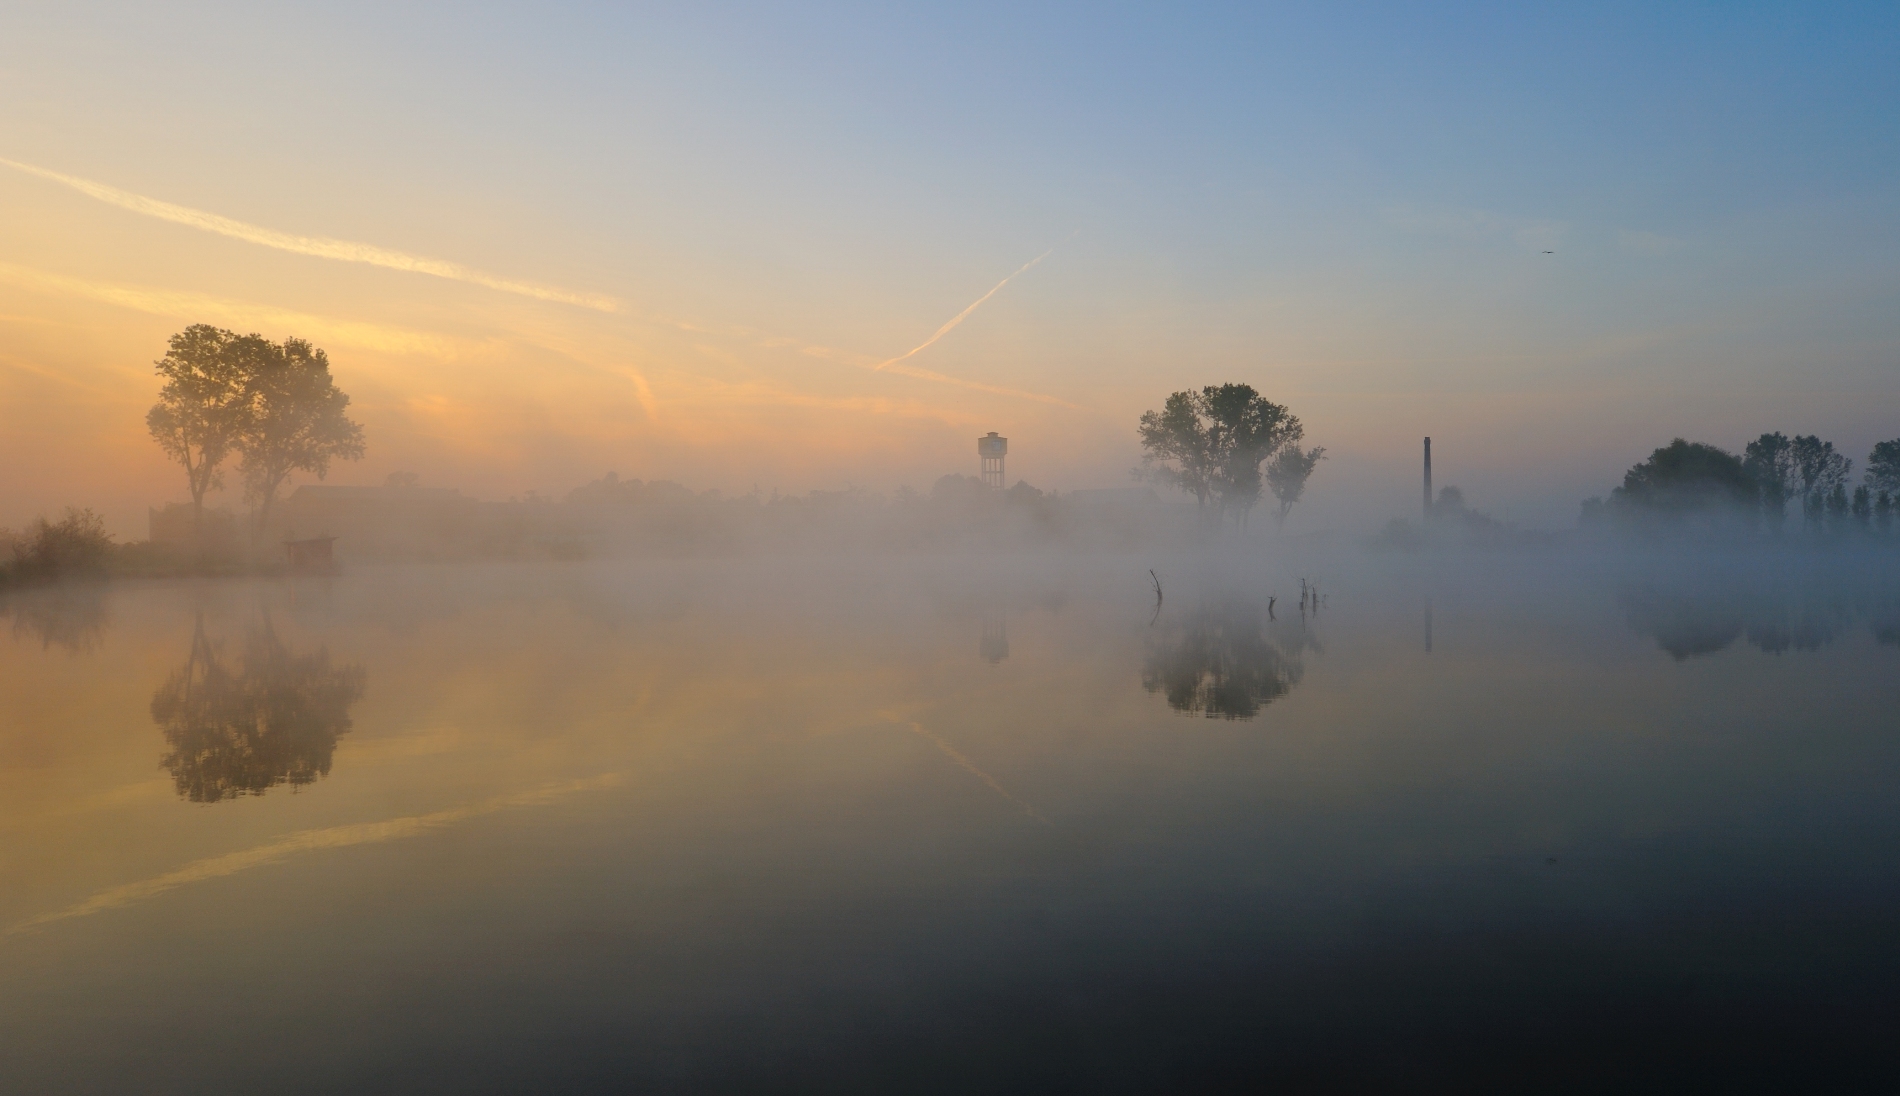 Fog on the lake...